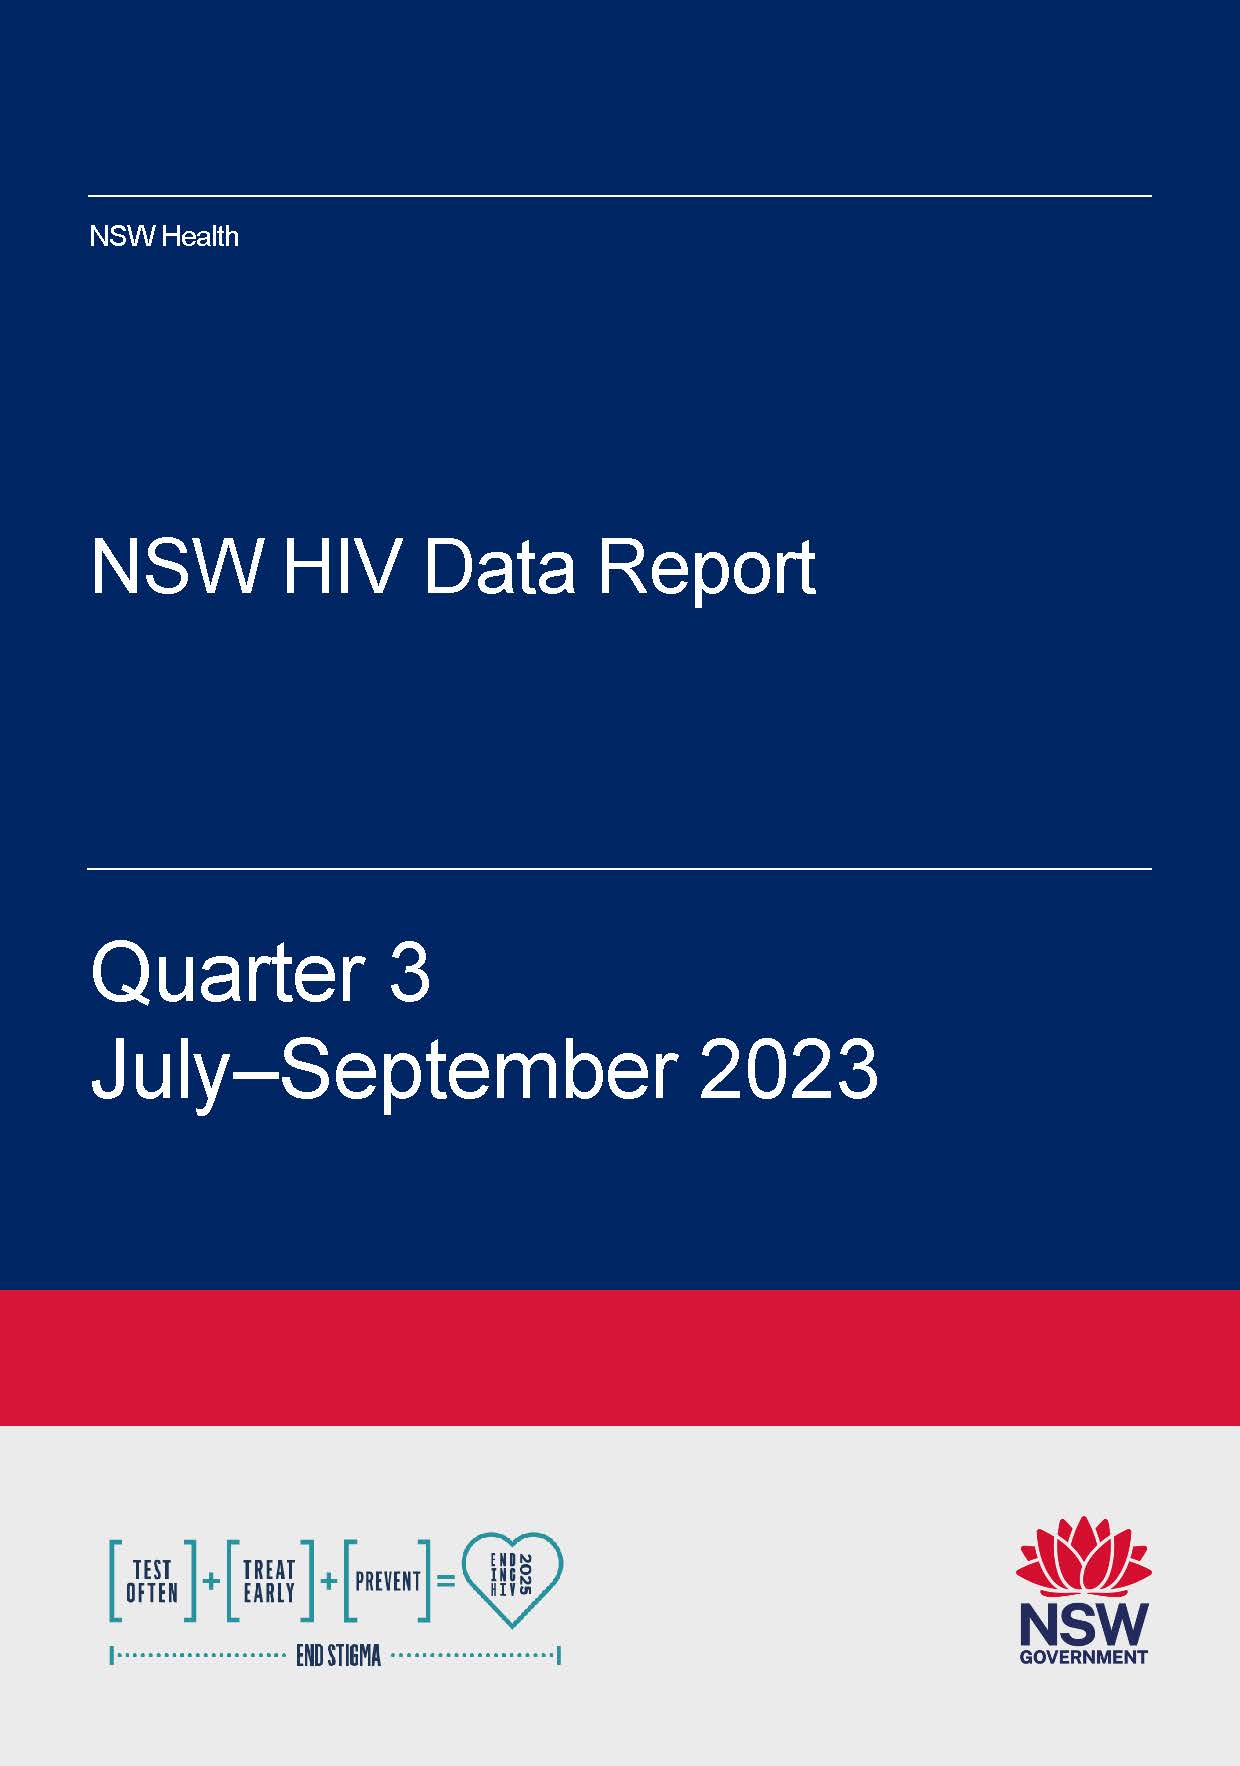 Third Quarter Data Report 2023